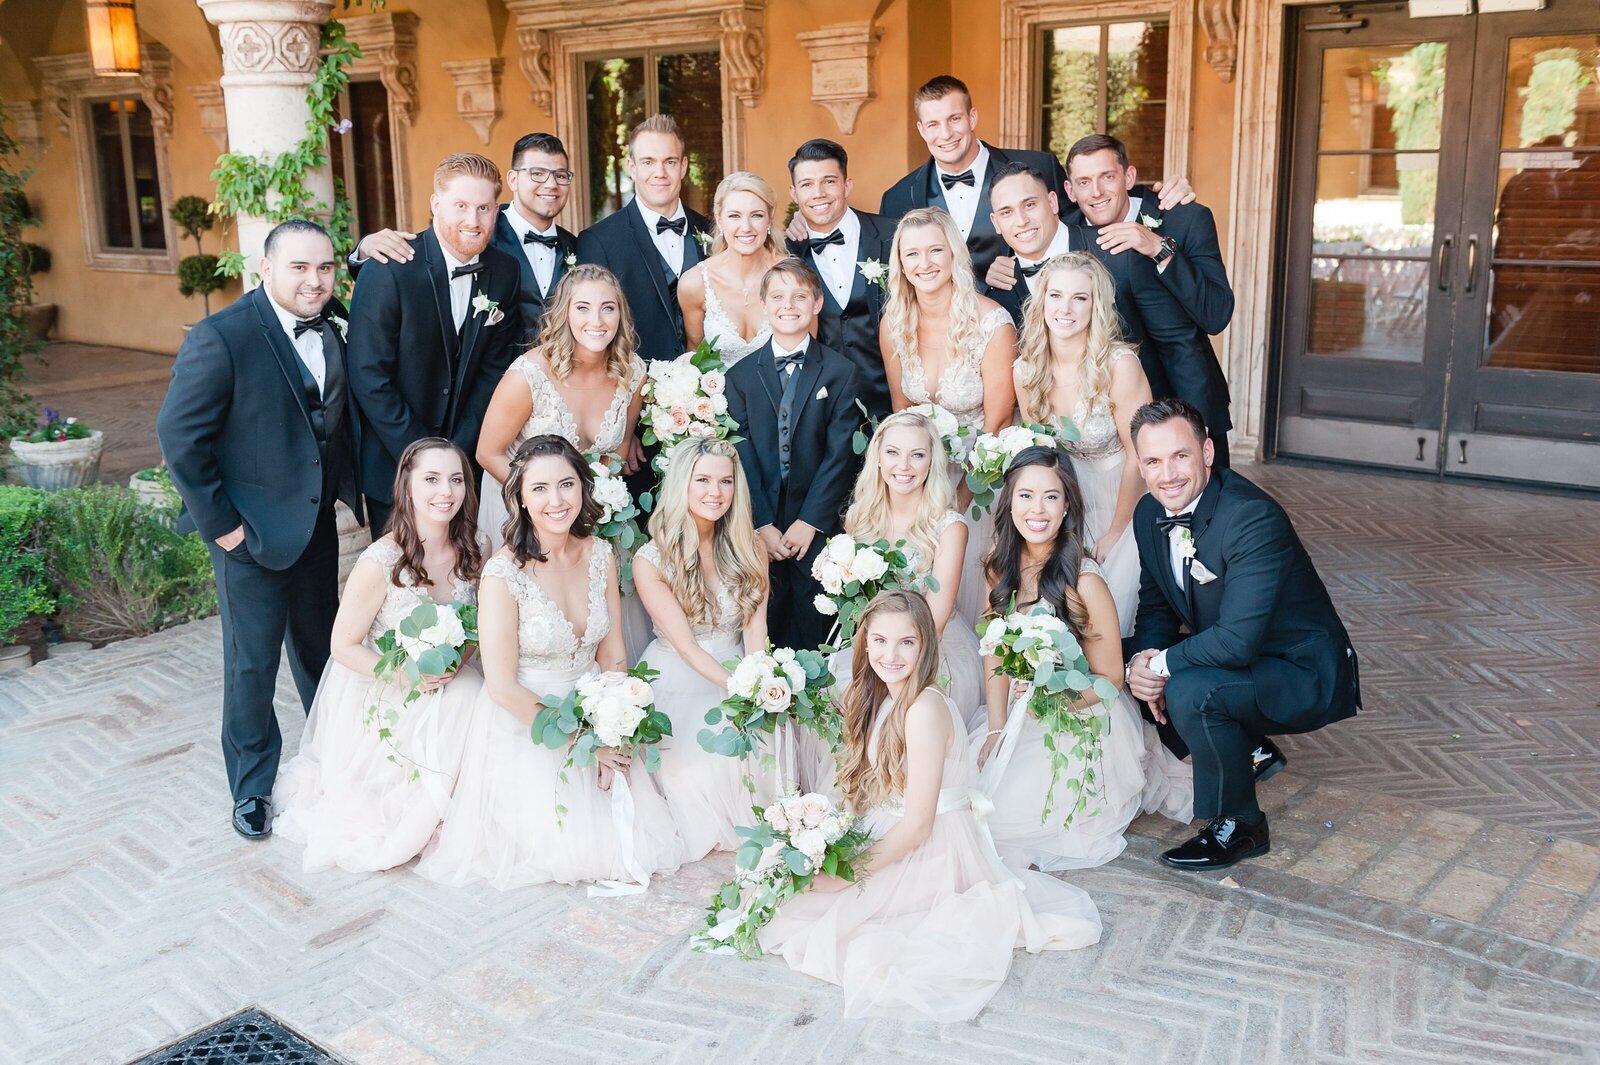 Large bridal party poses for a photo at Villa Siena.